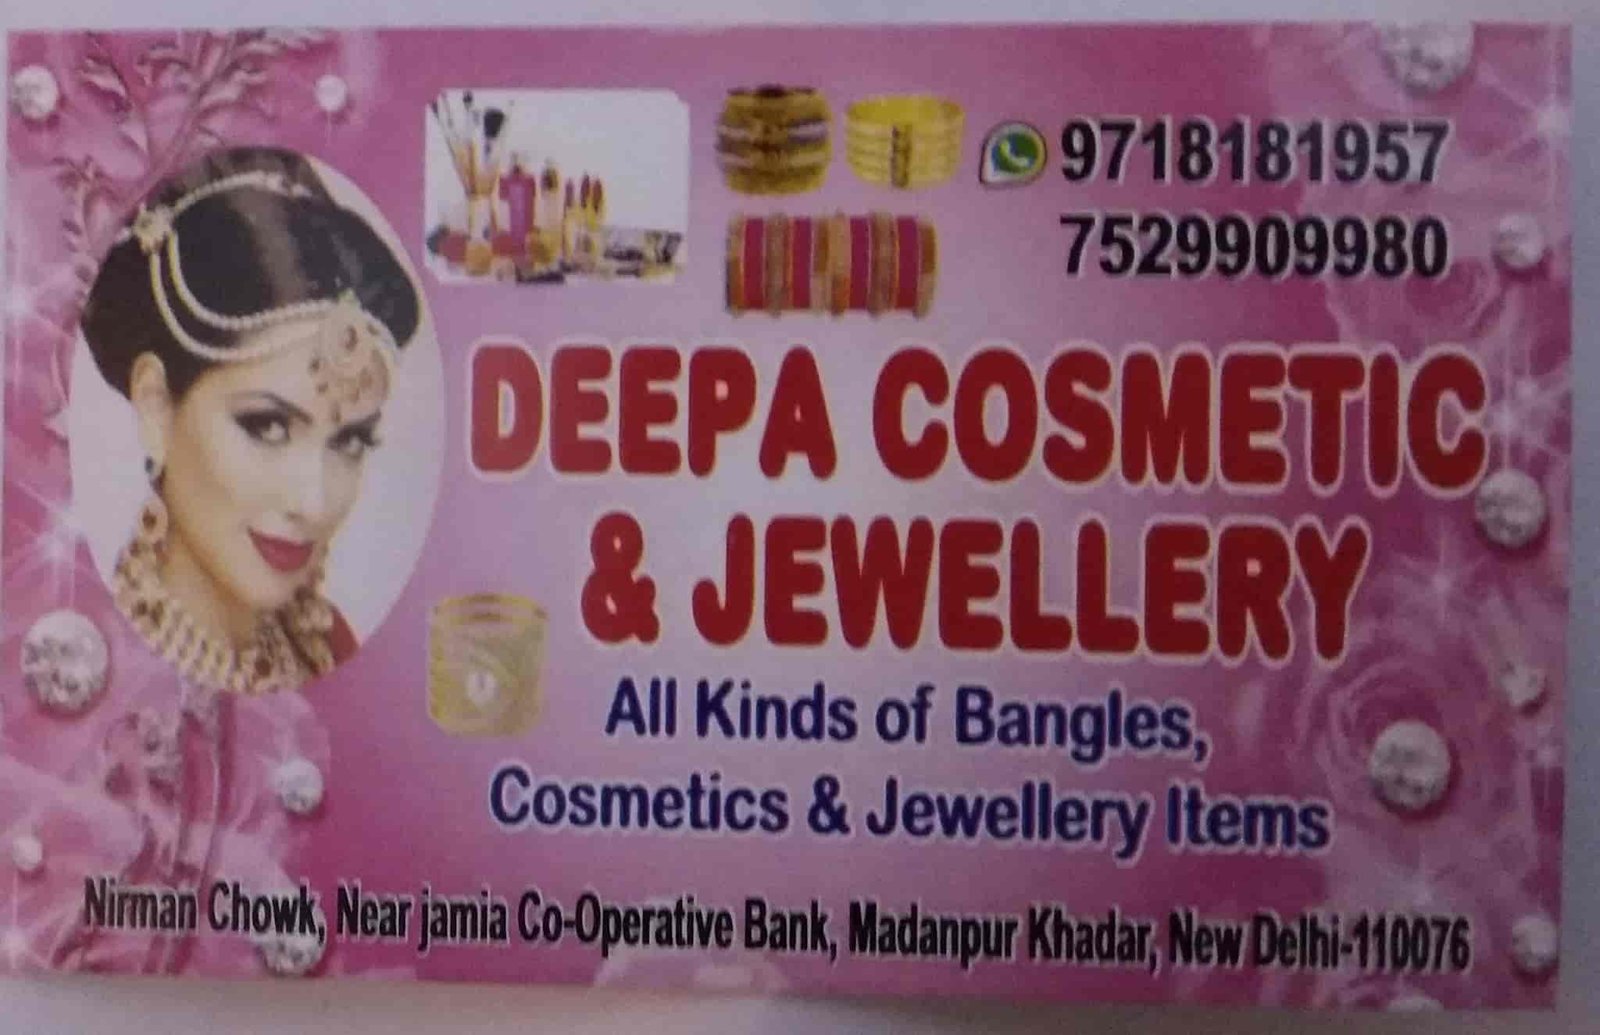 Deepa Cosmetic & Jewellery